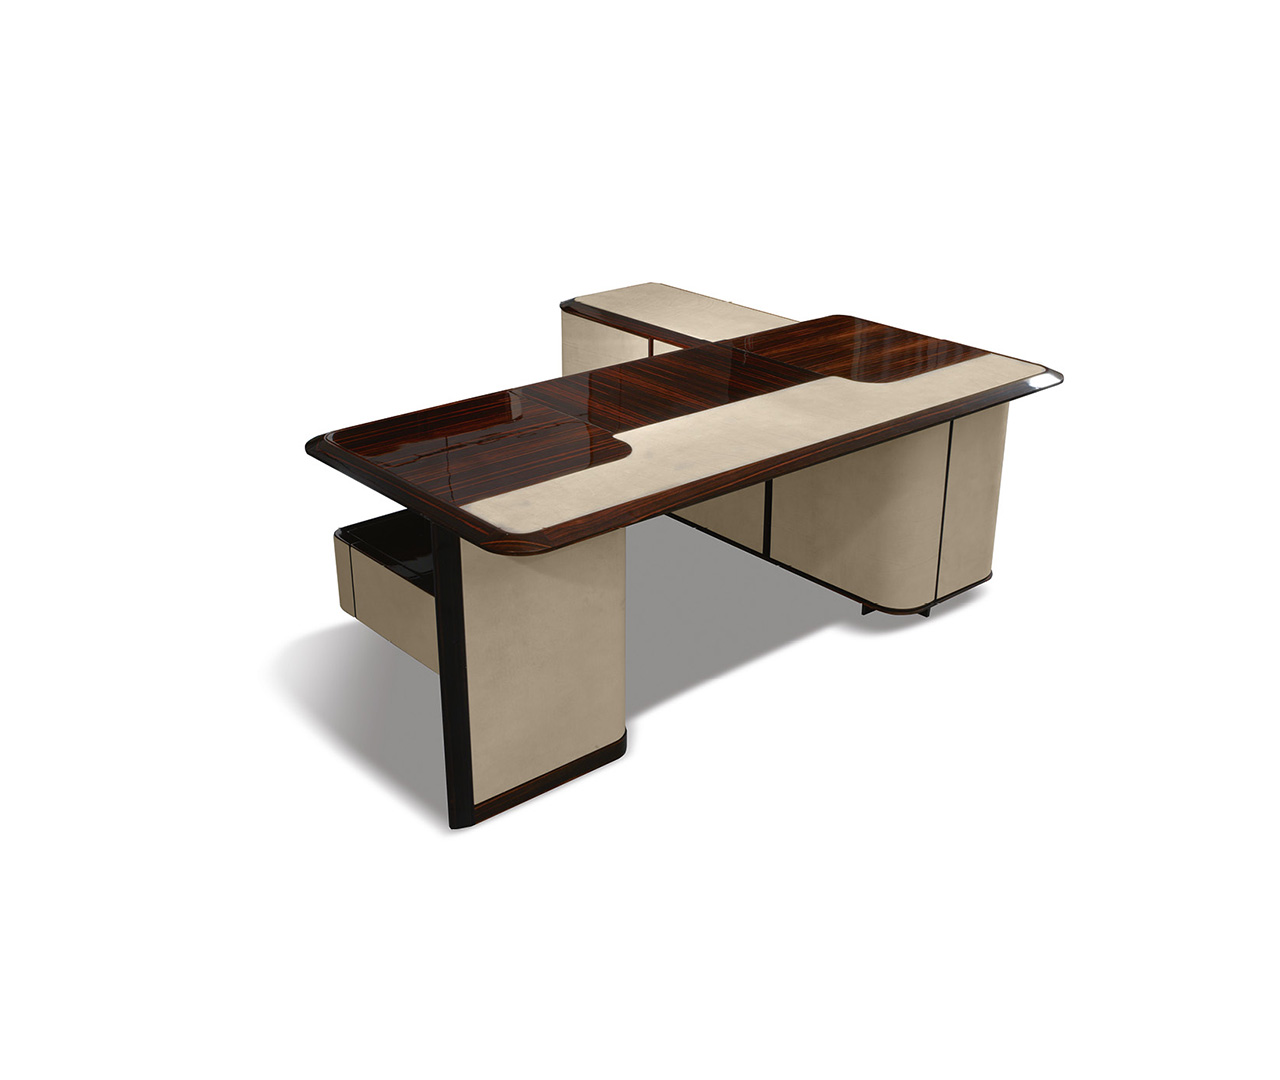 The Brown Glossy Wood Modern Desk